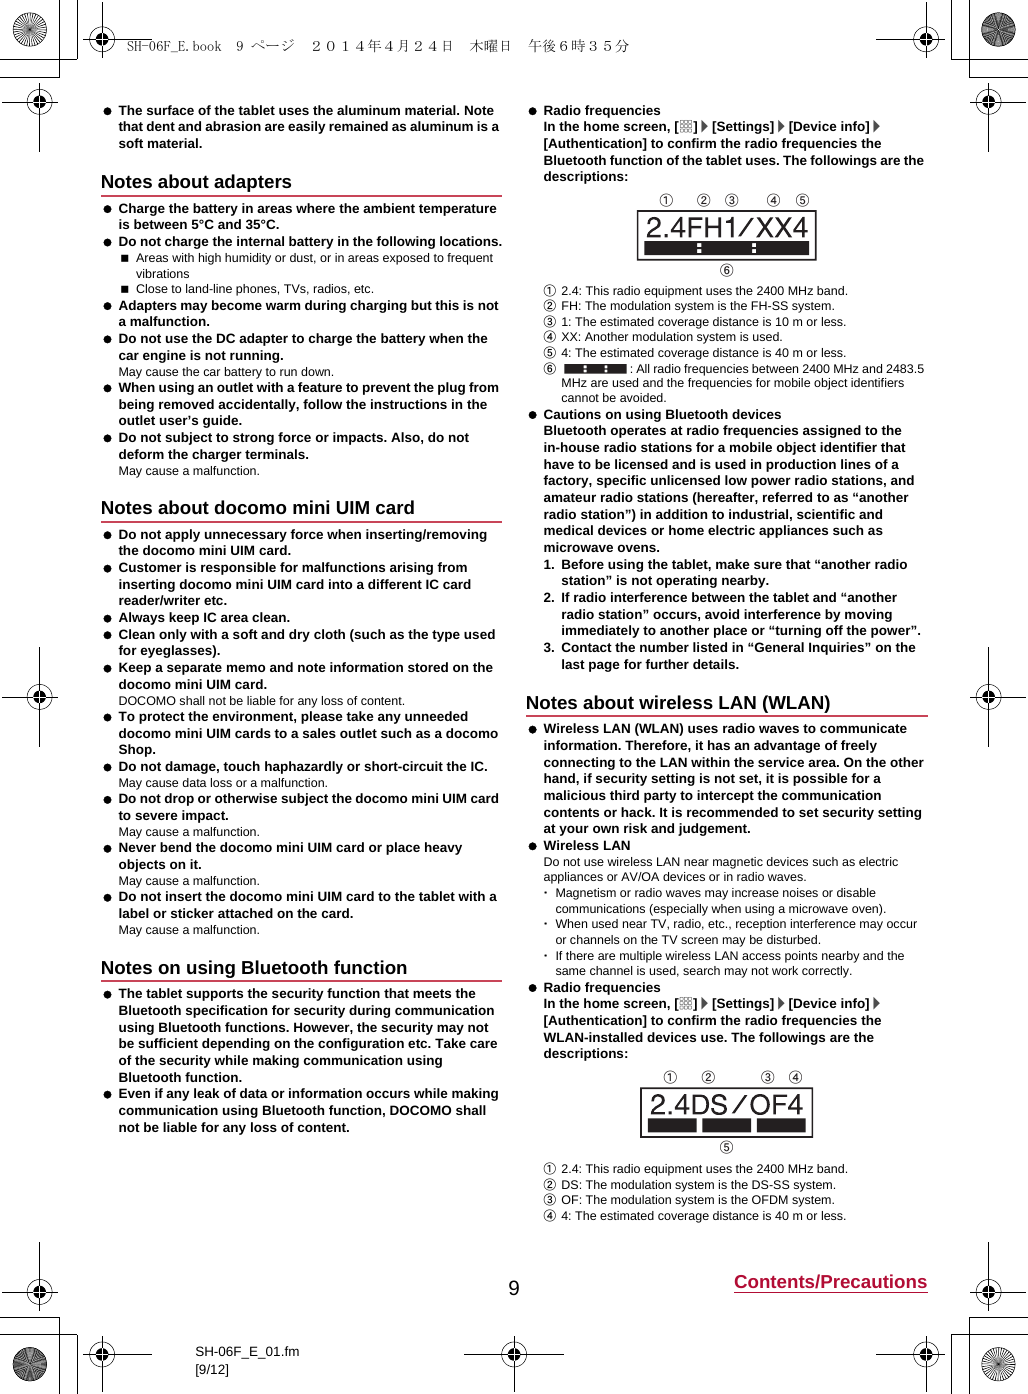 Page 8 of Sharp HRO00208 Hand Held Mini Phablet User Manual Manual